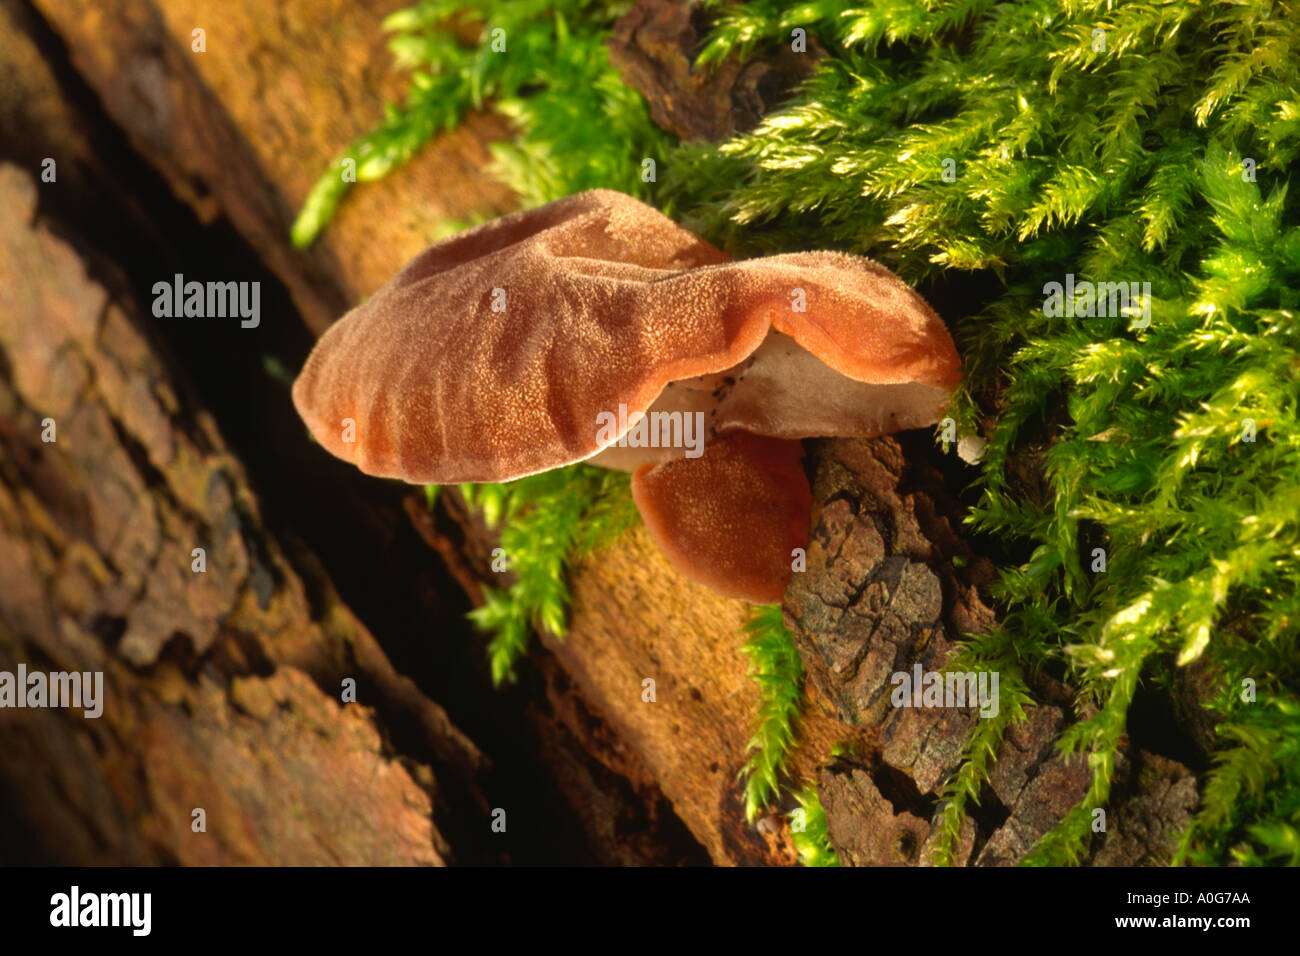 Jews ear fungus Auricularia aricularia judae among sphagnum moss on rotting fallen tree limb Stock Photo